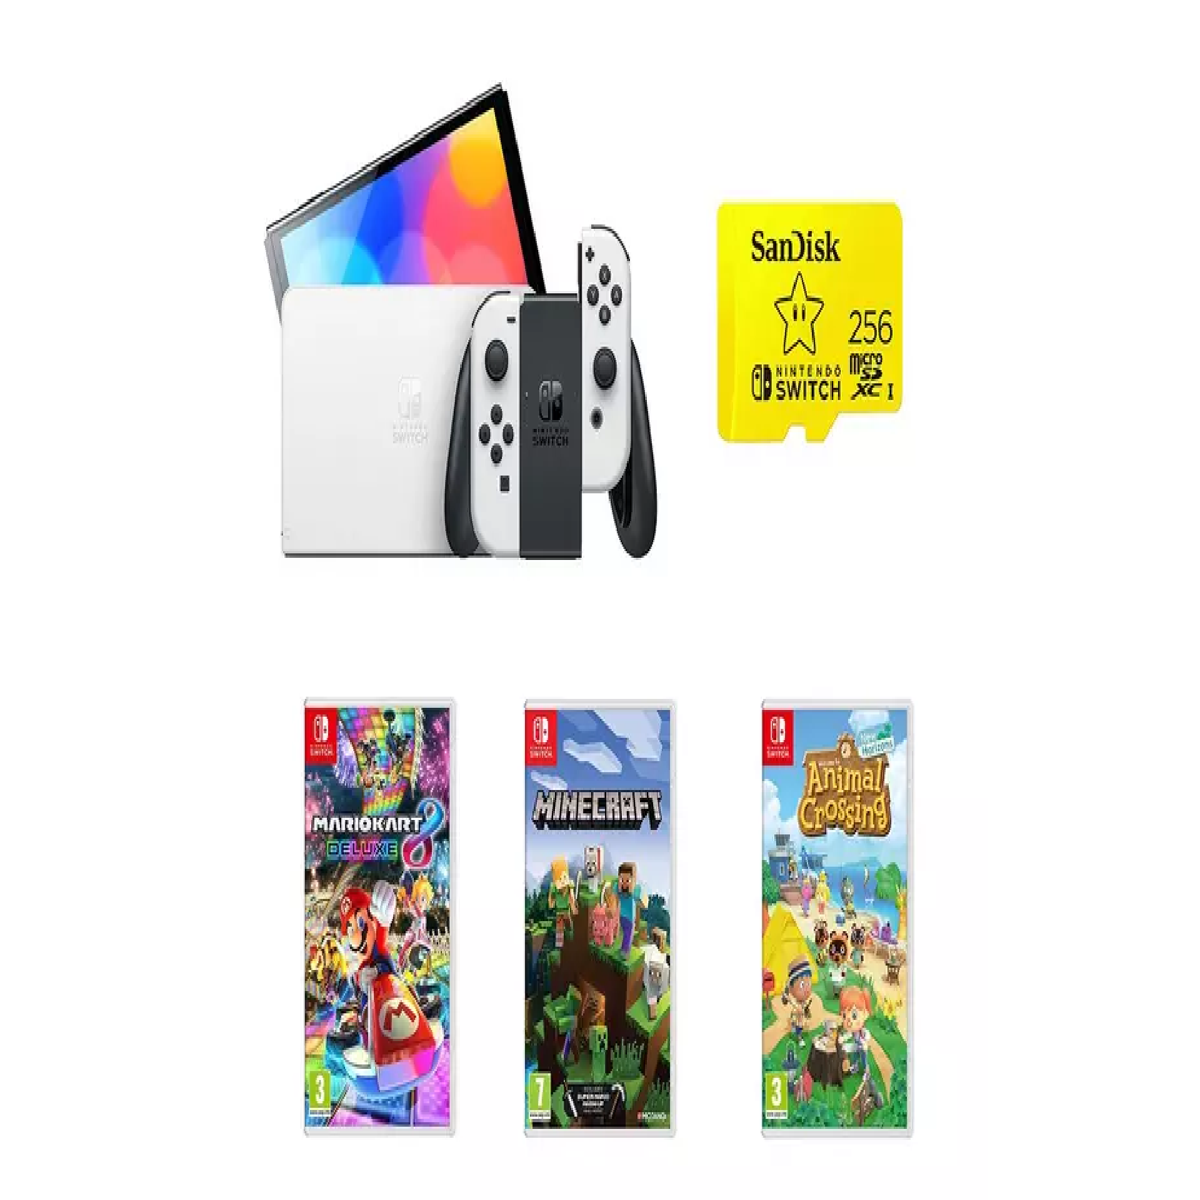 New Nintendo Switch OLED bundle on sale for Christmas